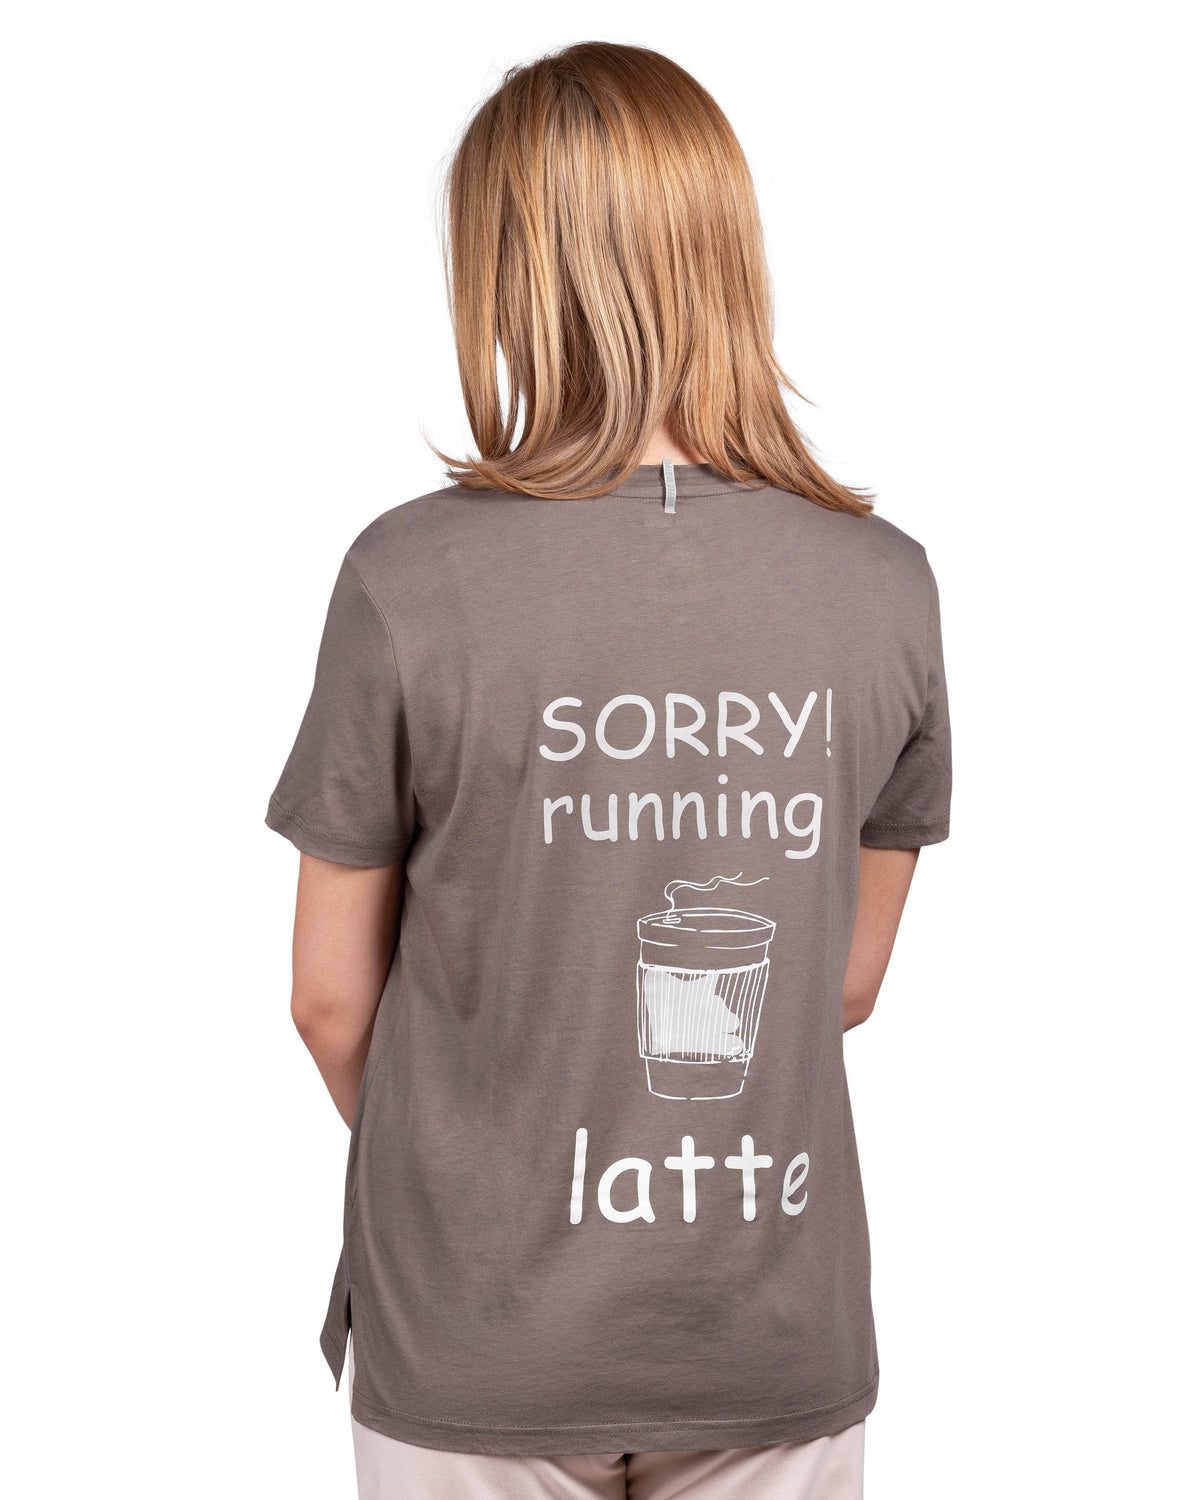 Current Mood Boyfriend T-Shirt - Sorry! running latte - LATTELOVE Co.